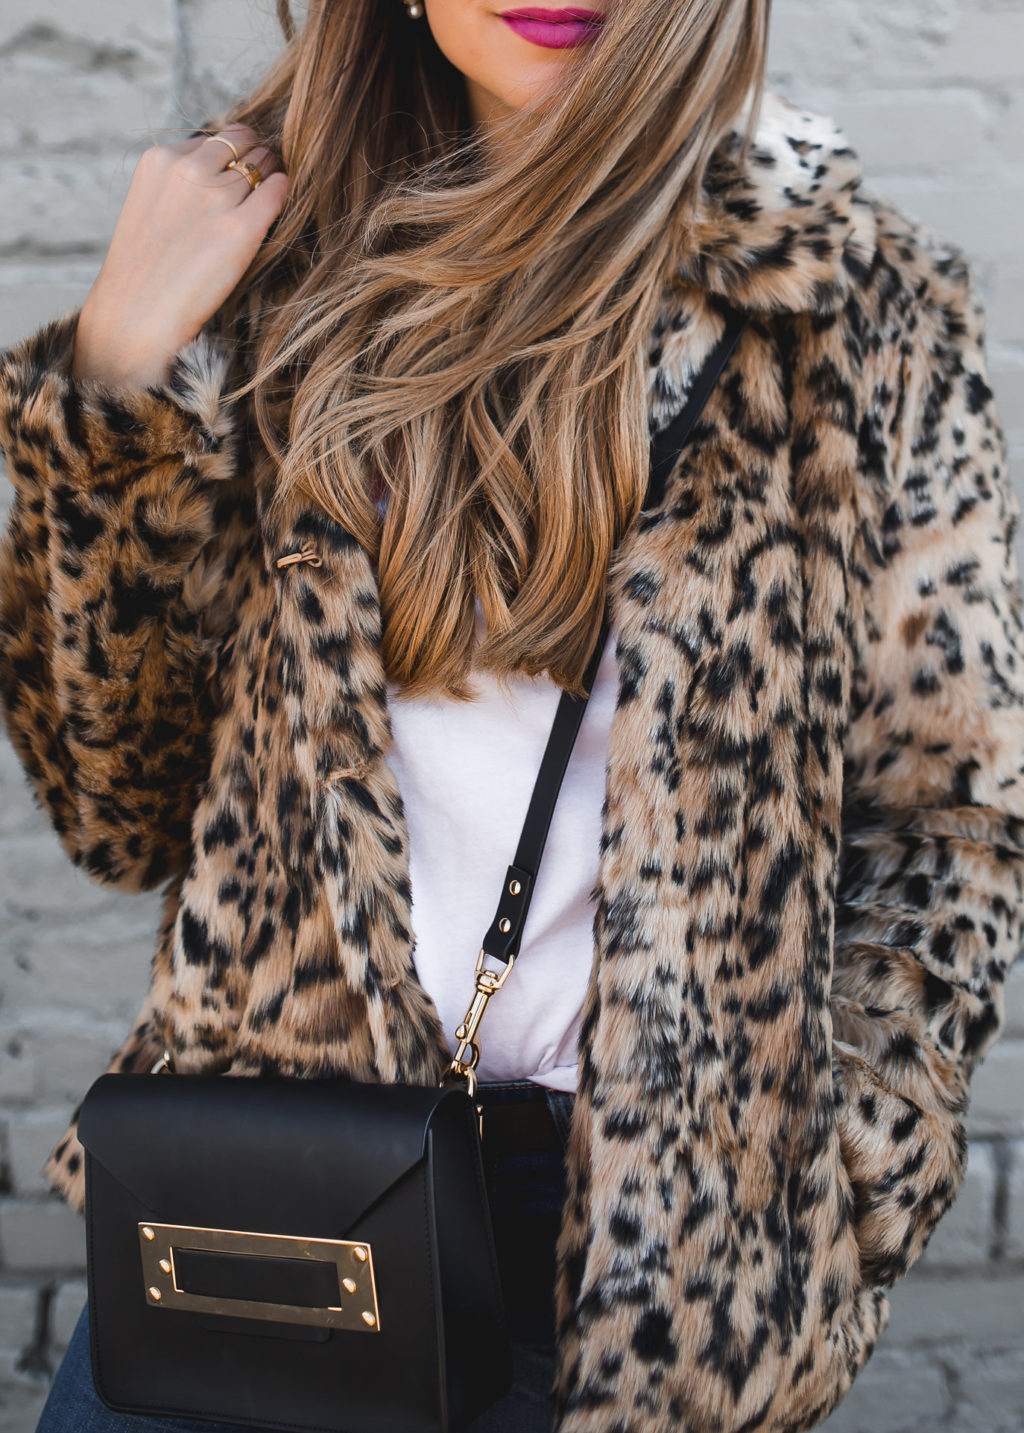 The Leopard Coat